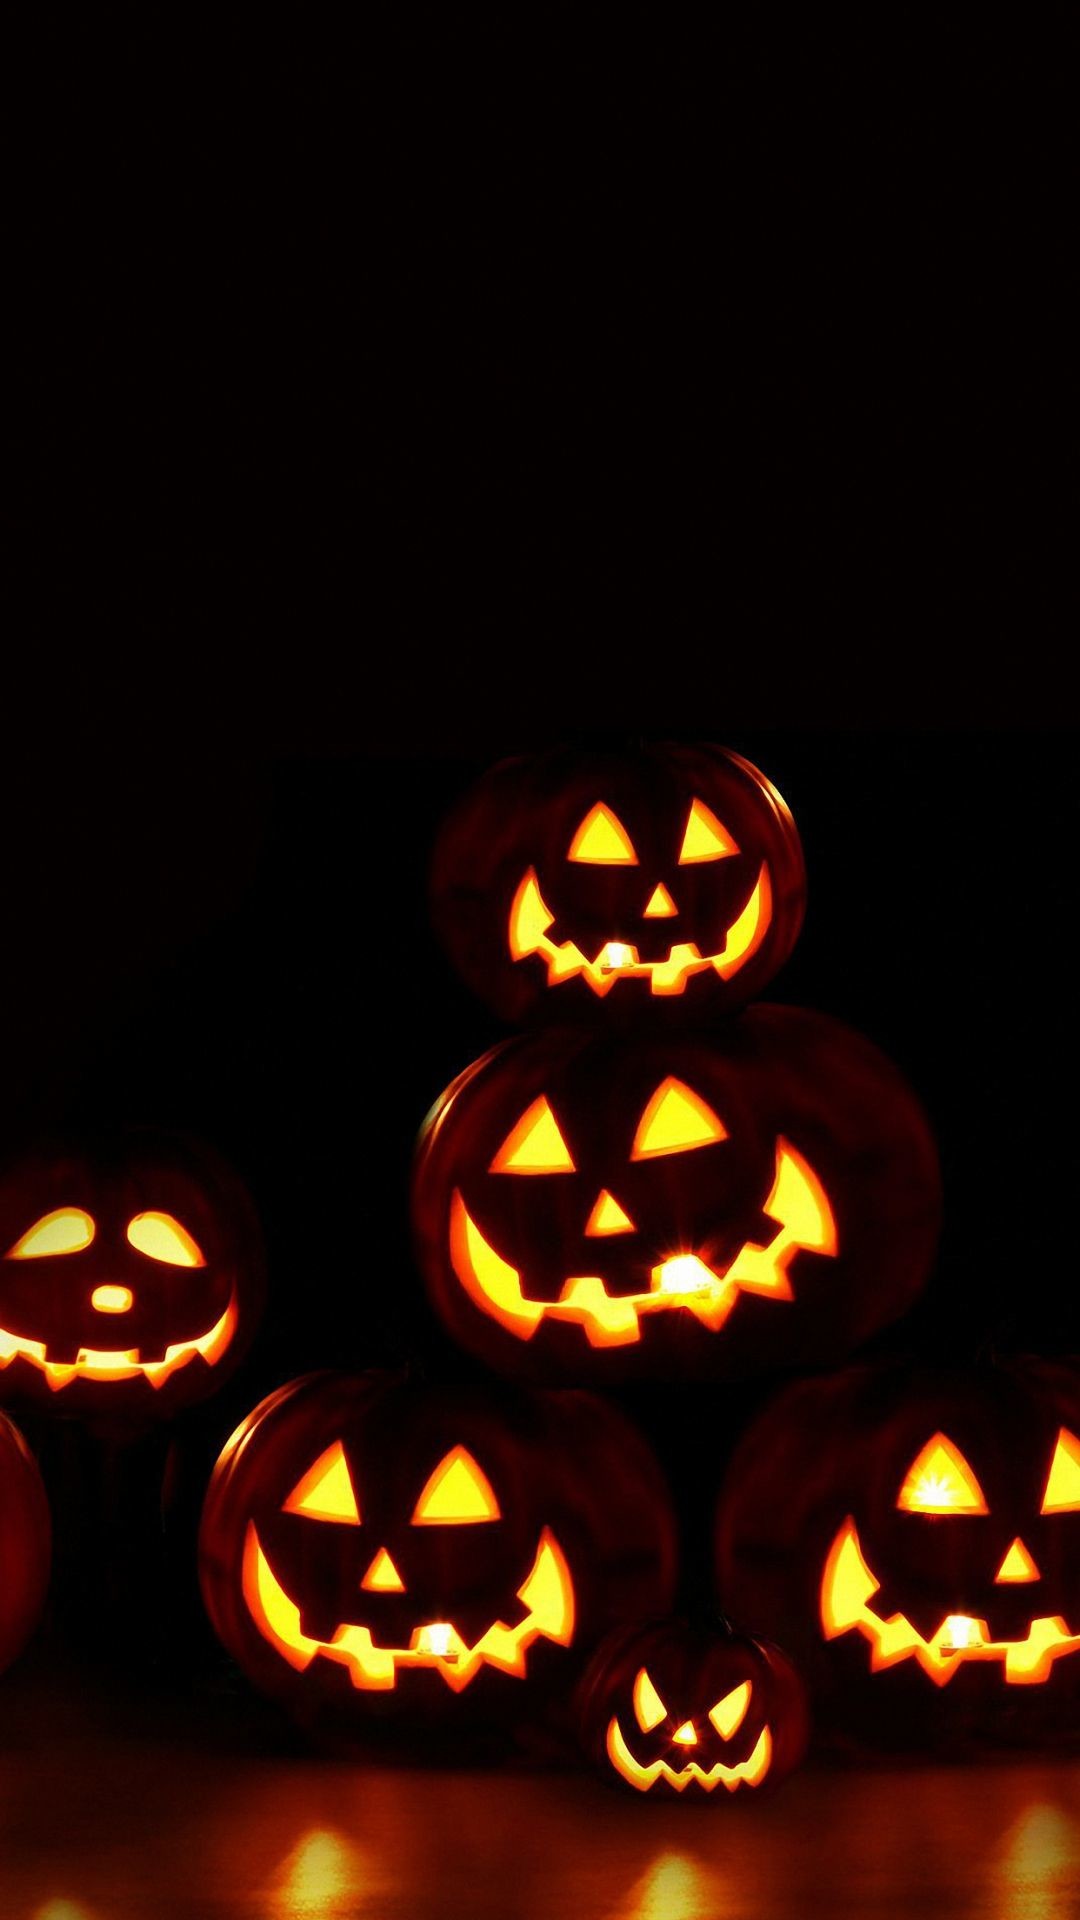 1080x1920 HD halloween pumpkin lights wallpapers, holiday mobile background